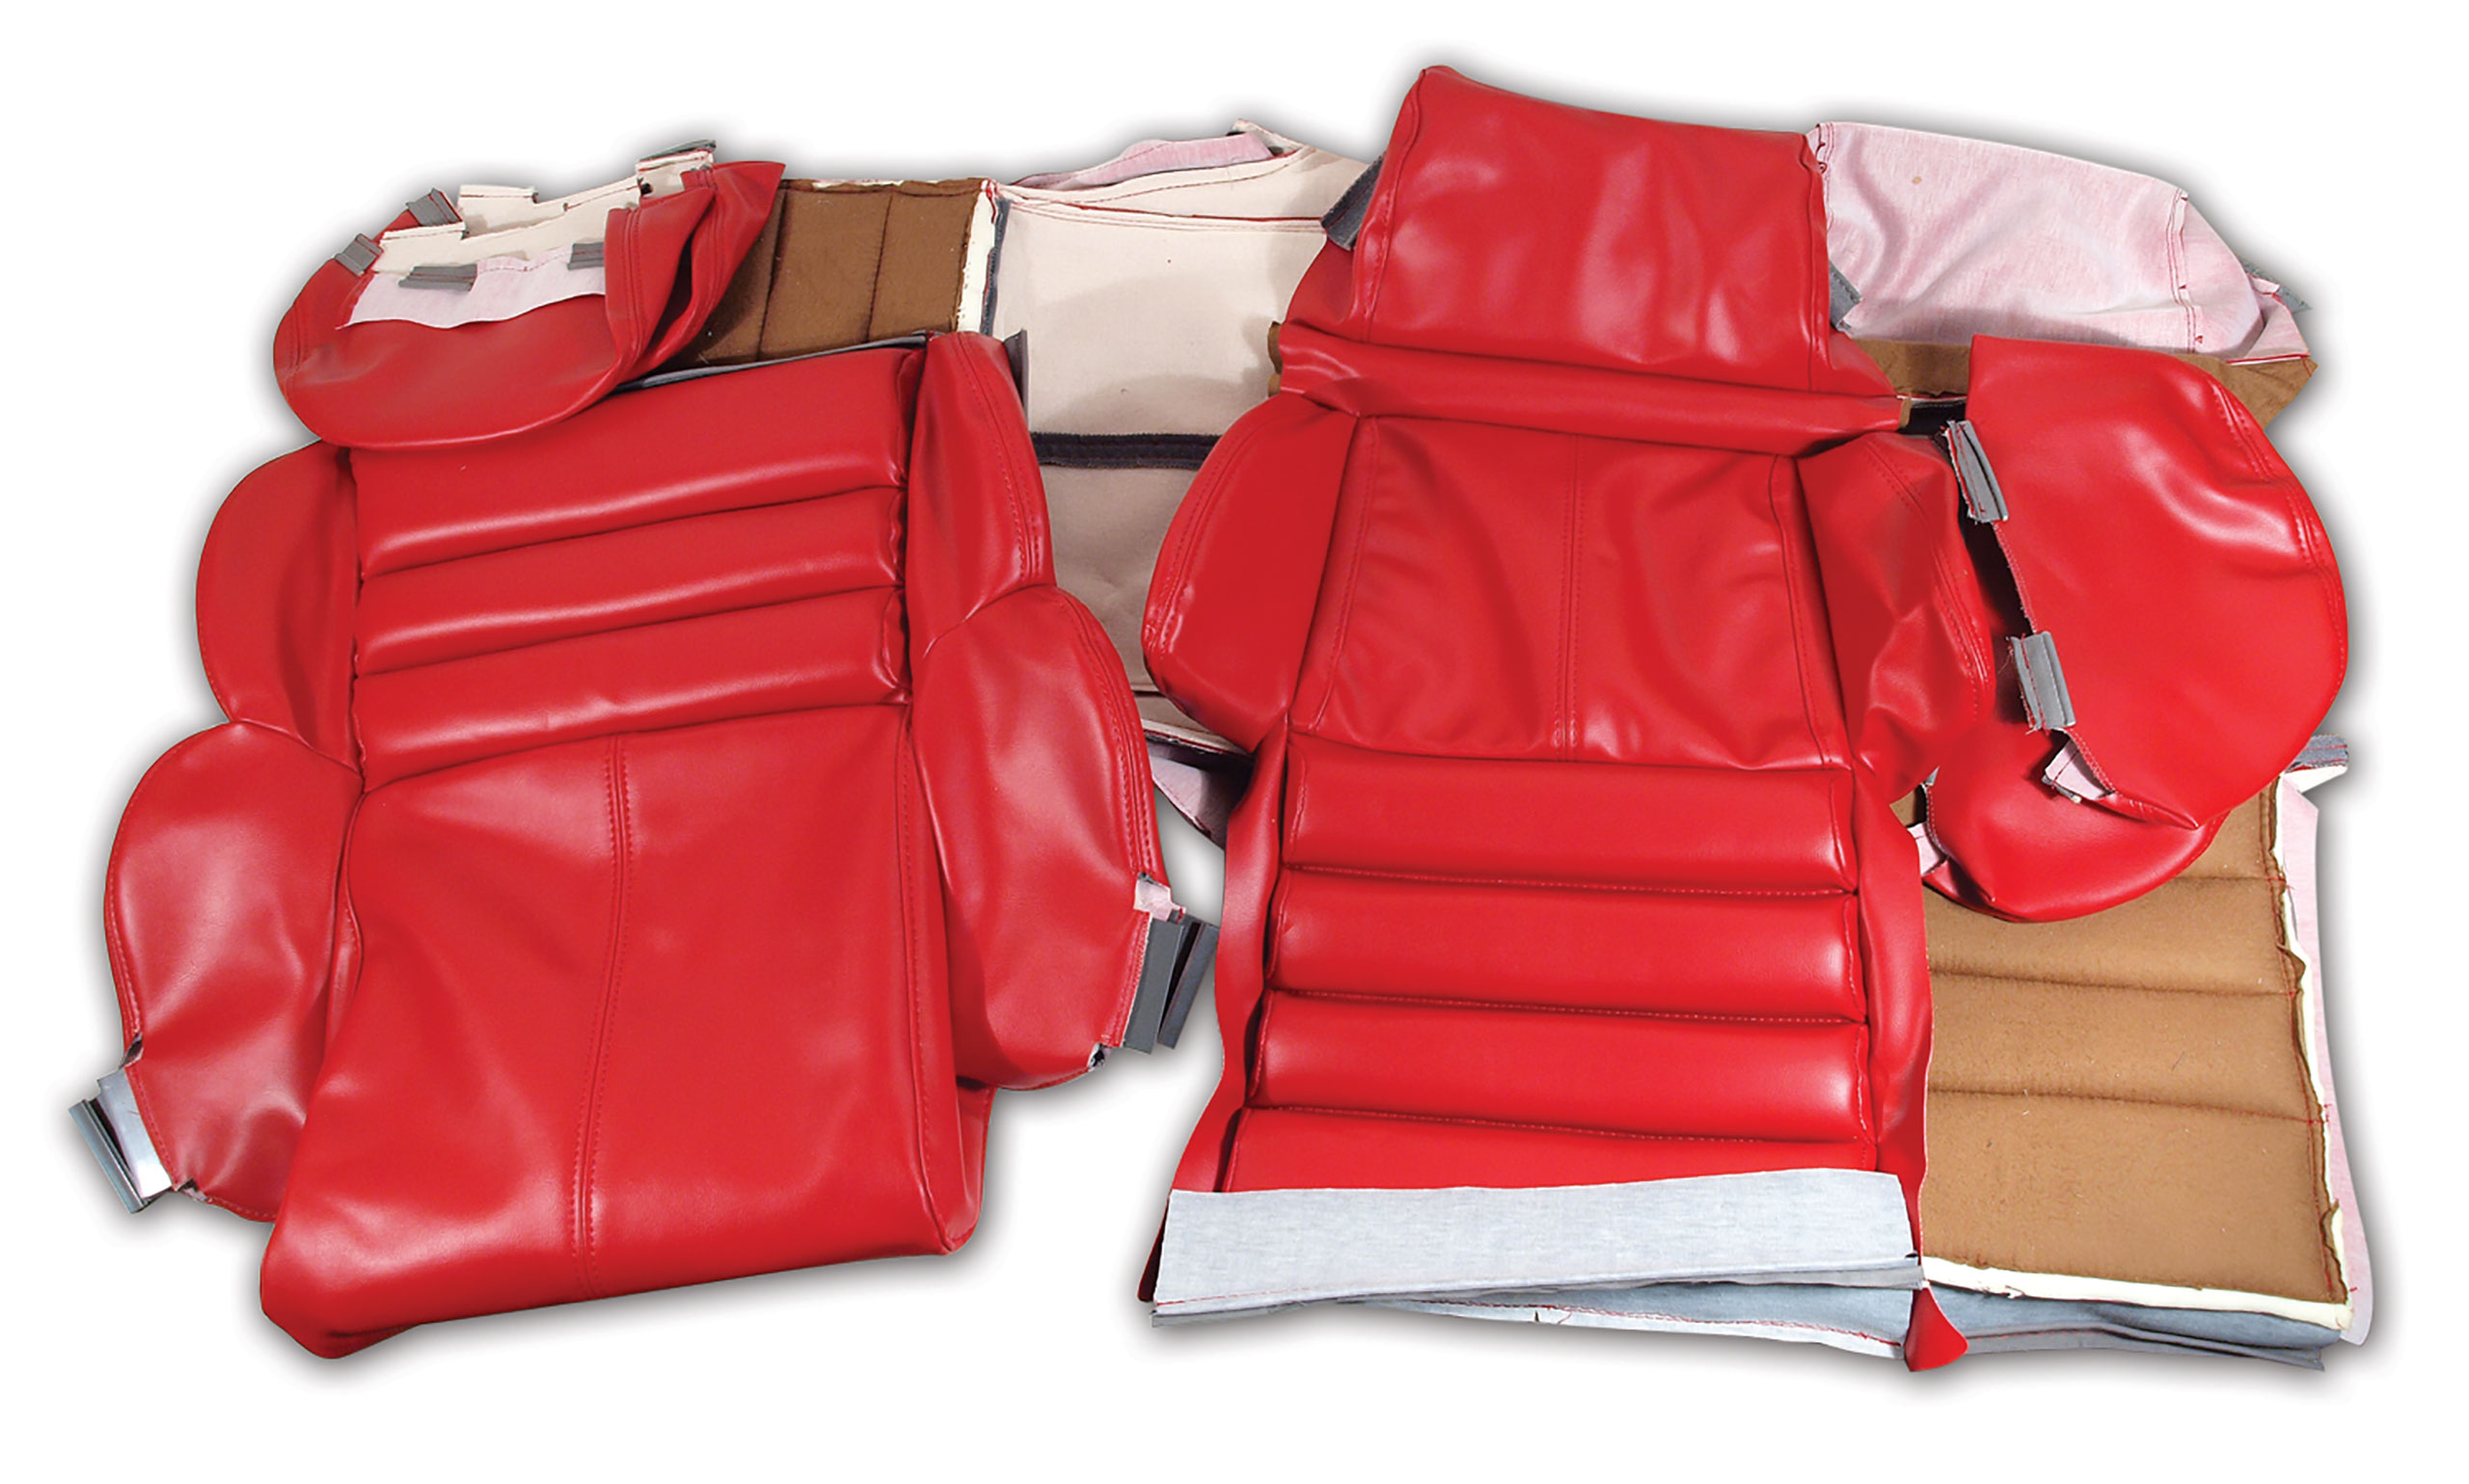 1989-1990 Corvette C4 "Leather-Like" Vinyl Seat Covers Red Sport CA-422175 